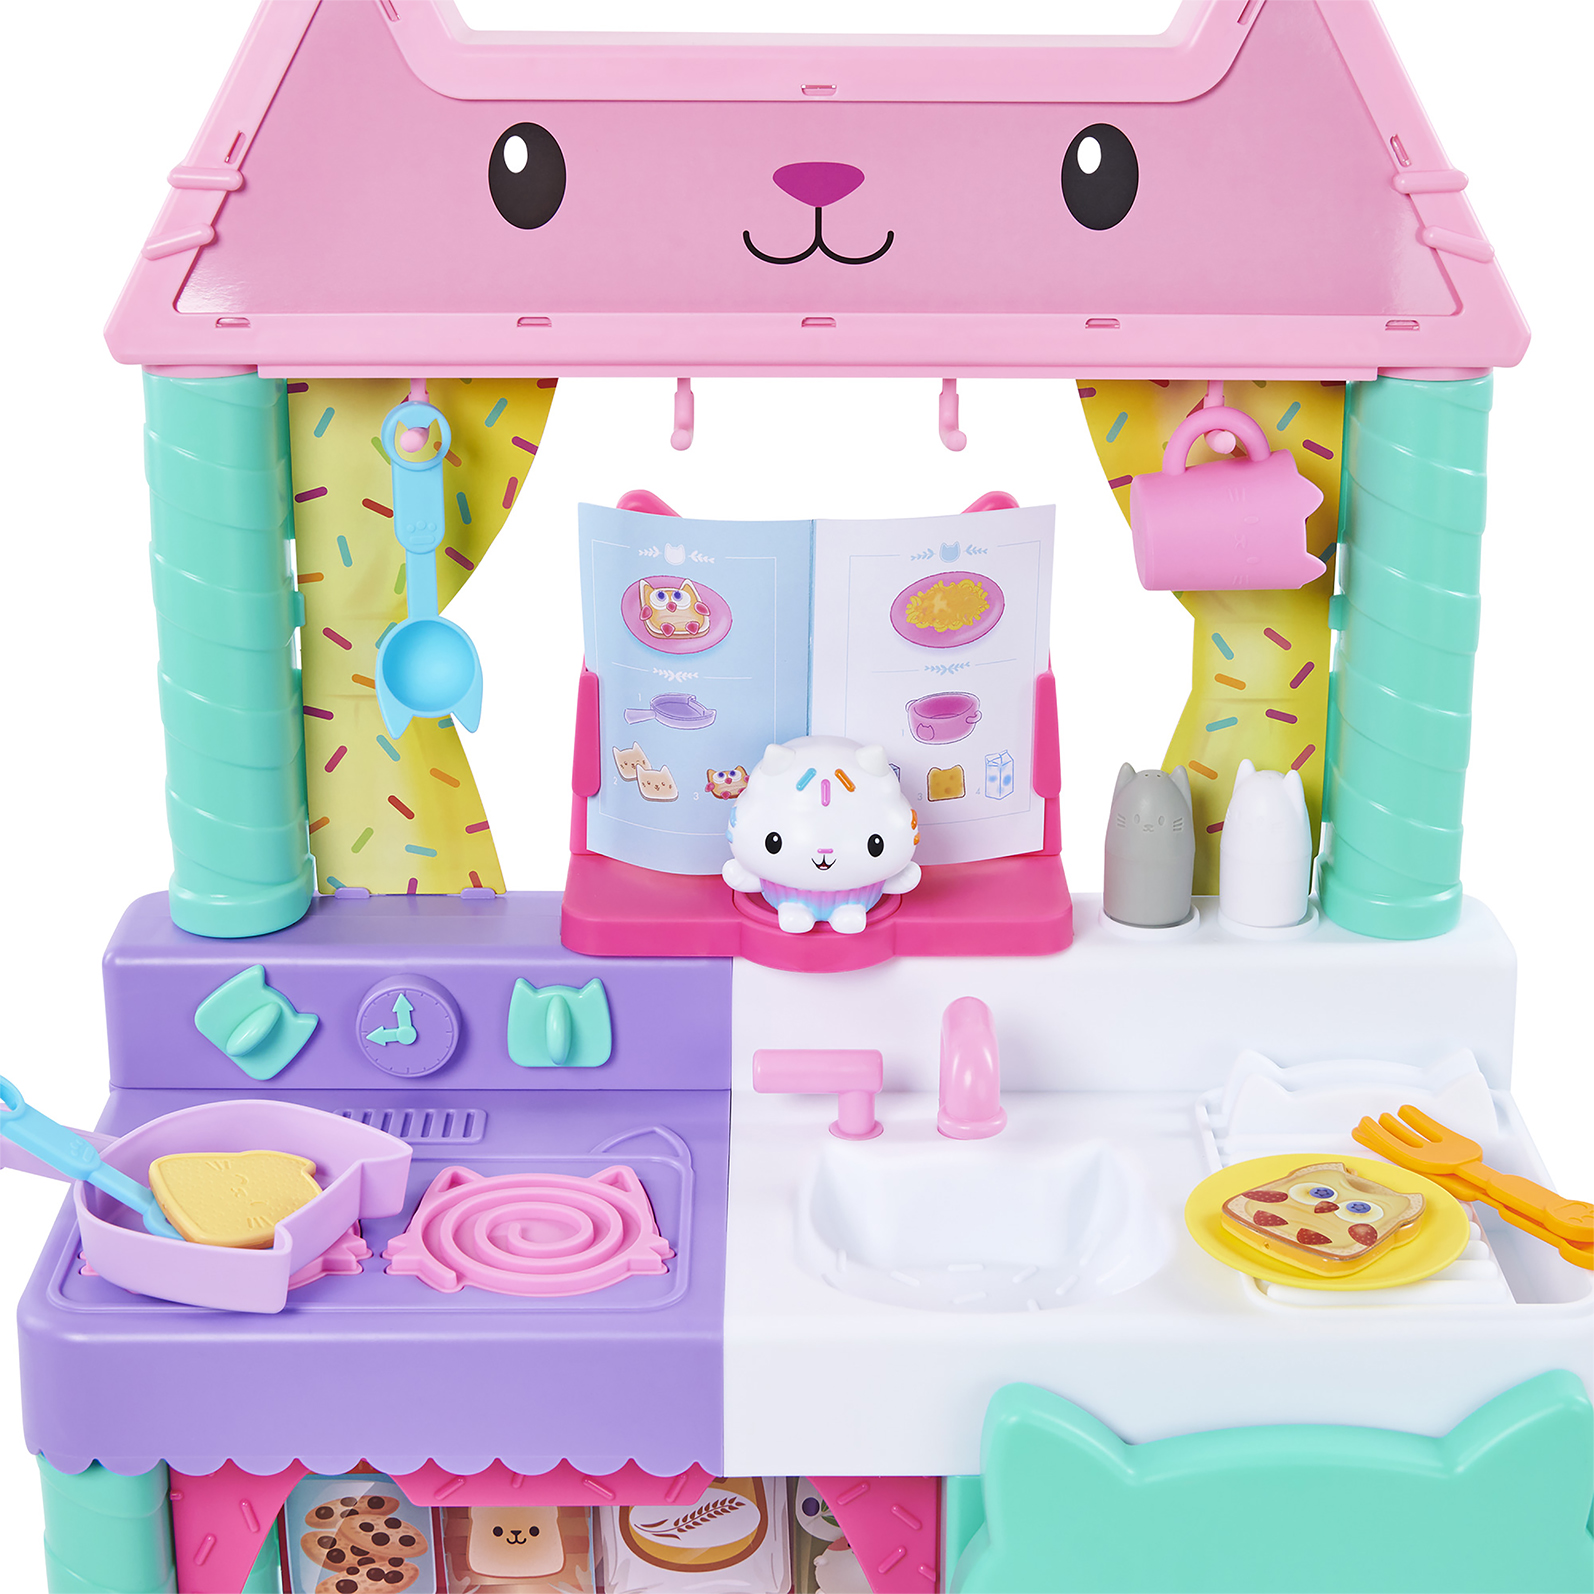 Gabby's Dollhouse - Mega Cozinha